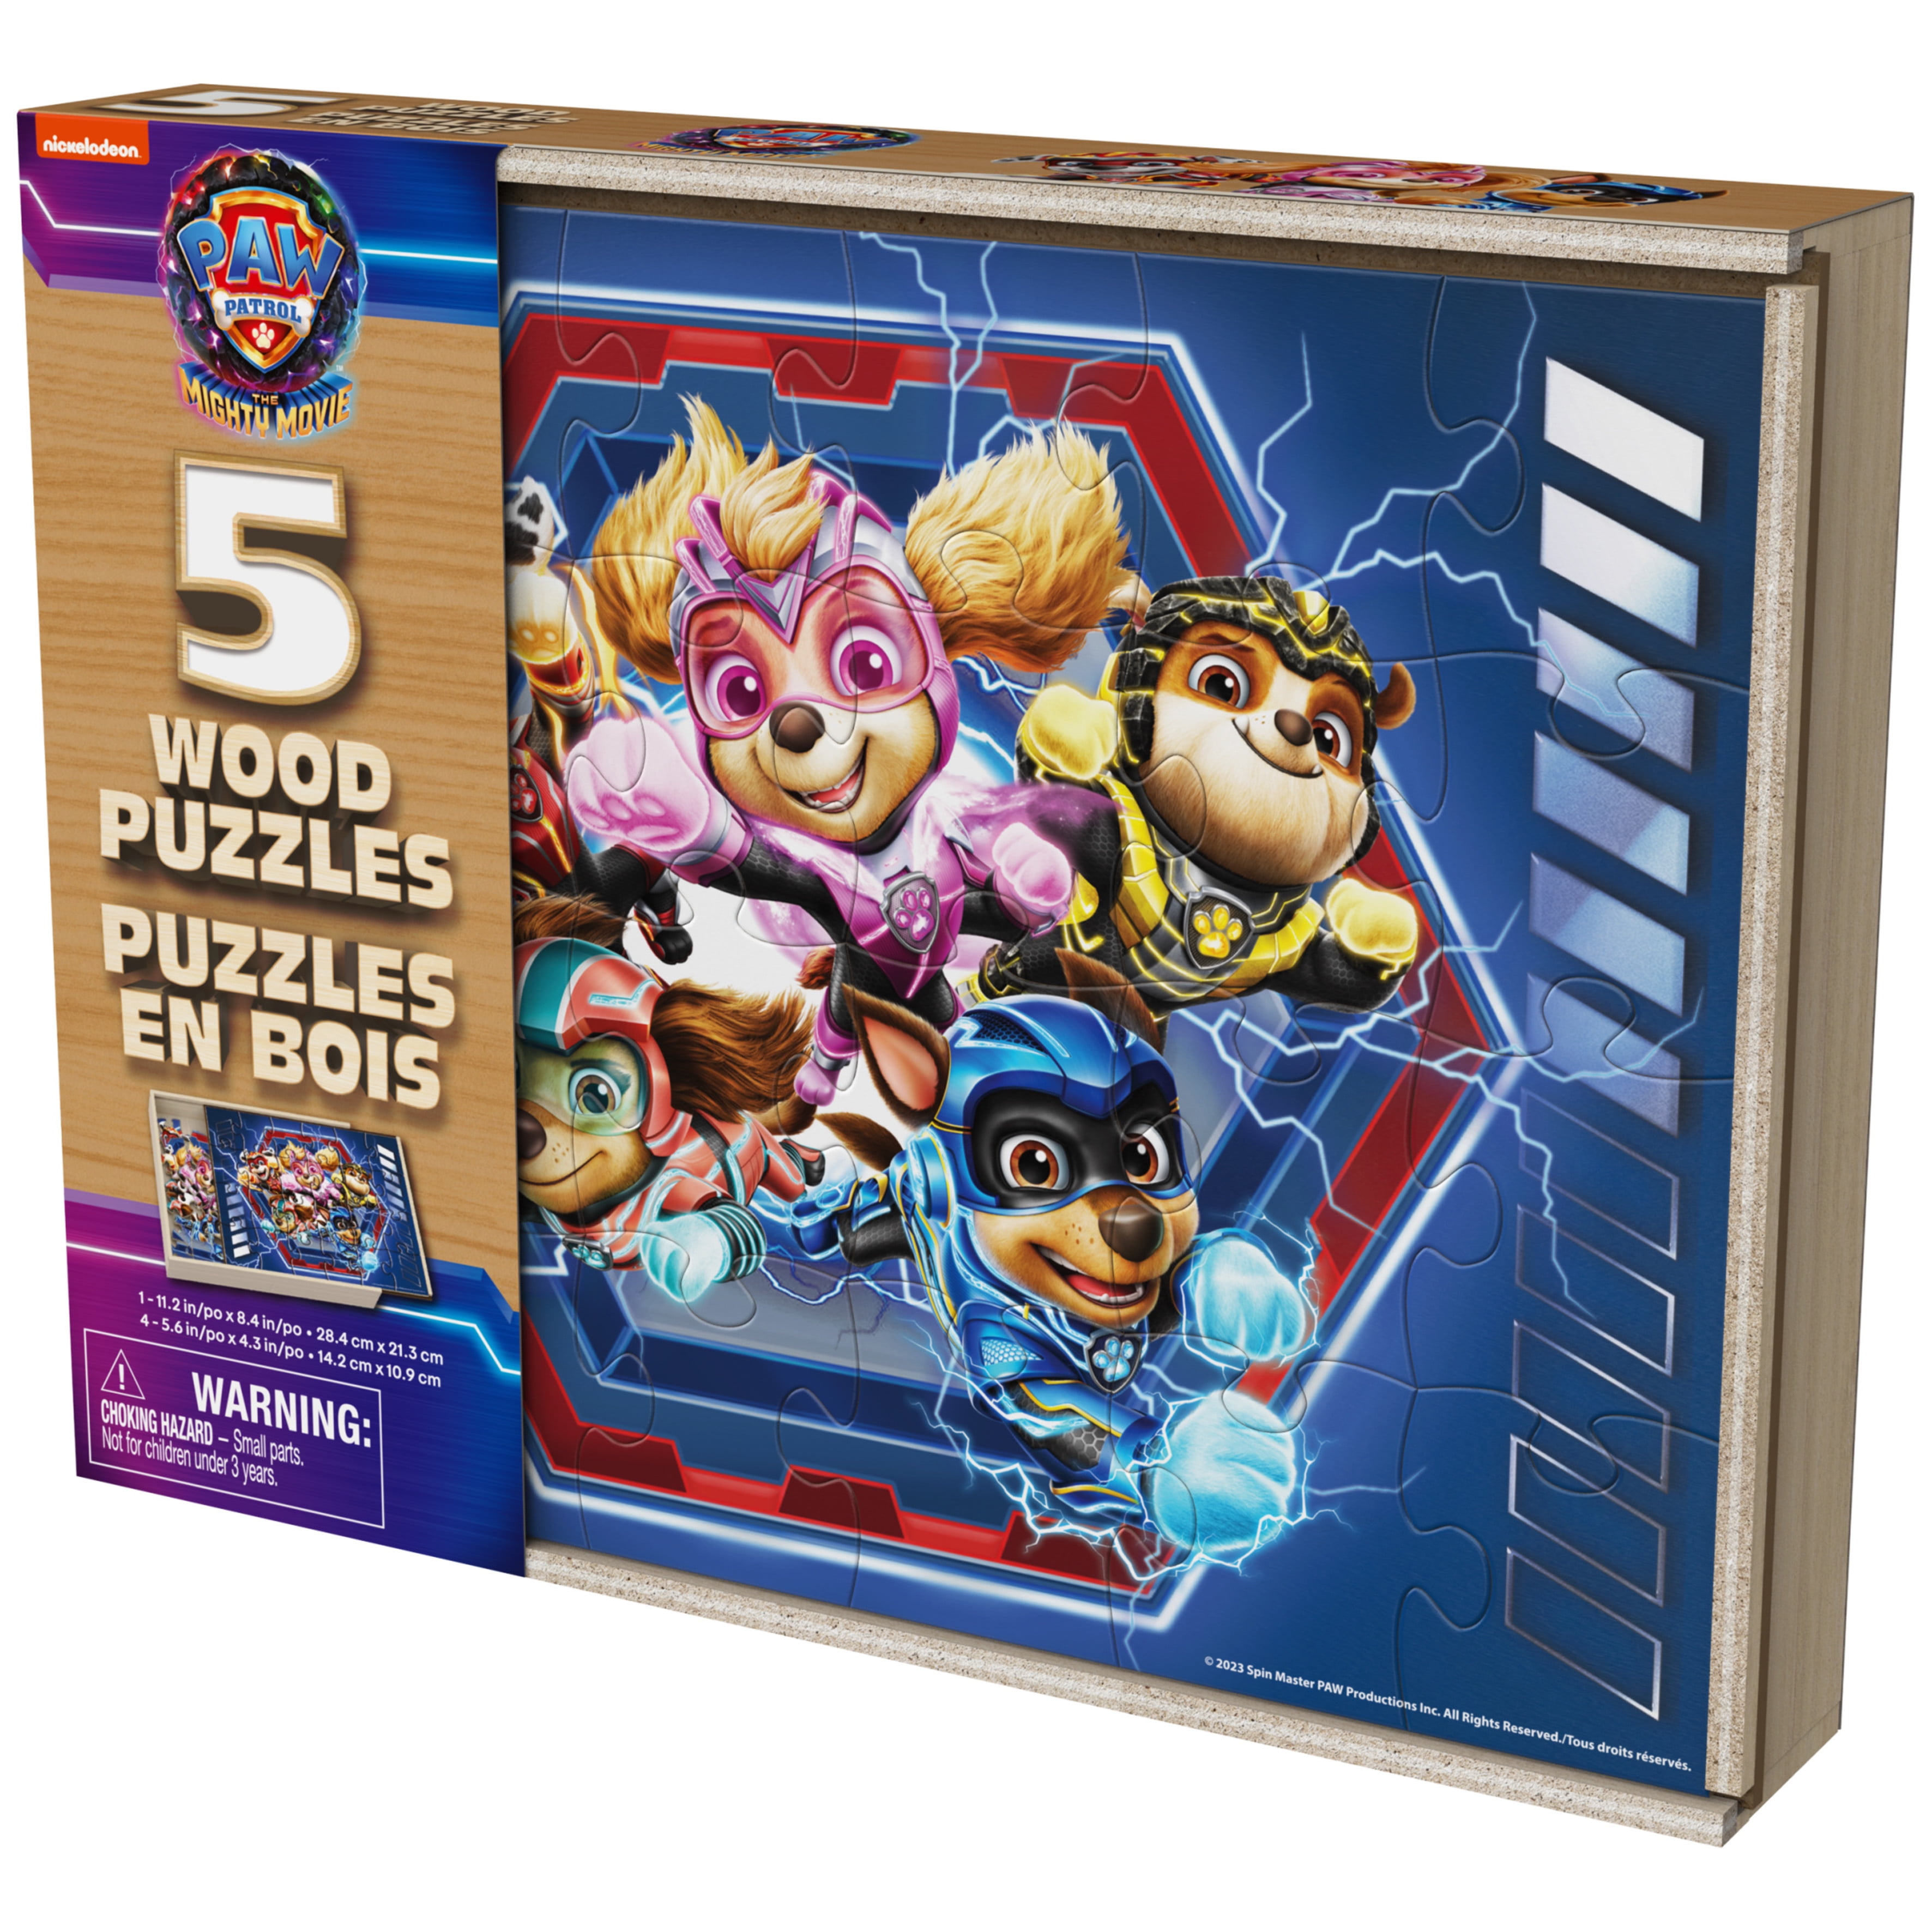 NEW Set of Disney Wish theme 5 wooden puzzles with storage box